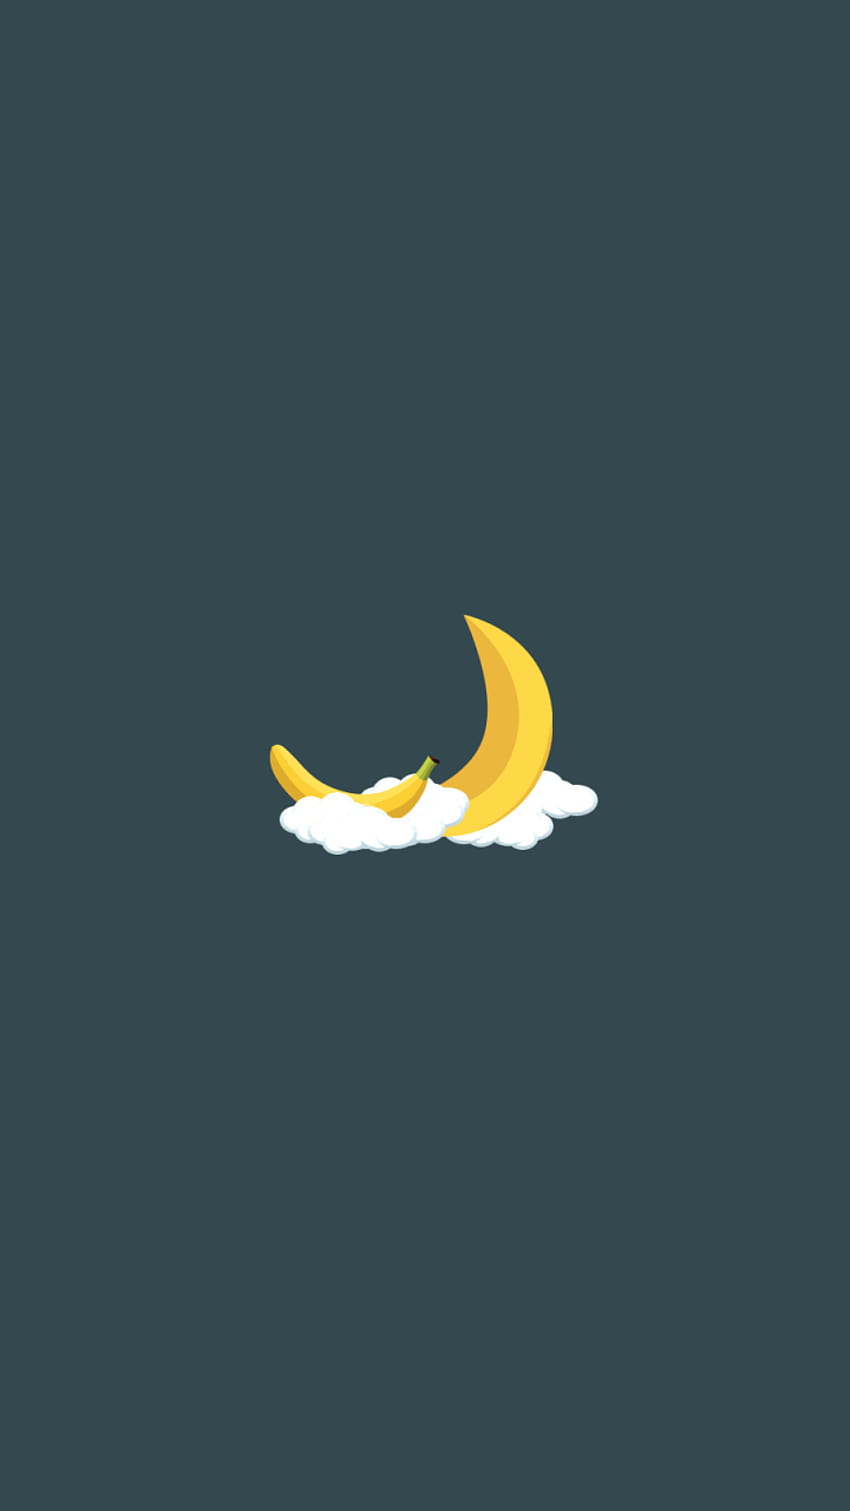 Banana, lua, nuvens, mínimo, 720x1280, kpop minimalista Papel de parede de celular HD